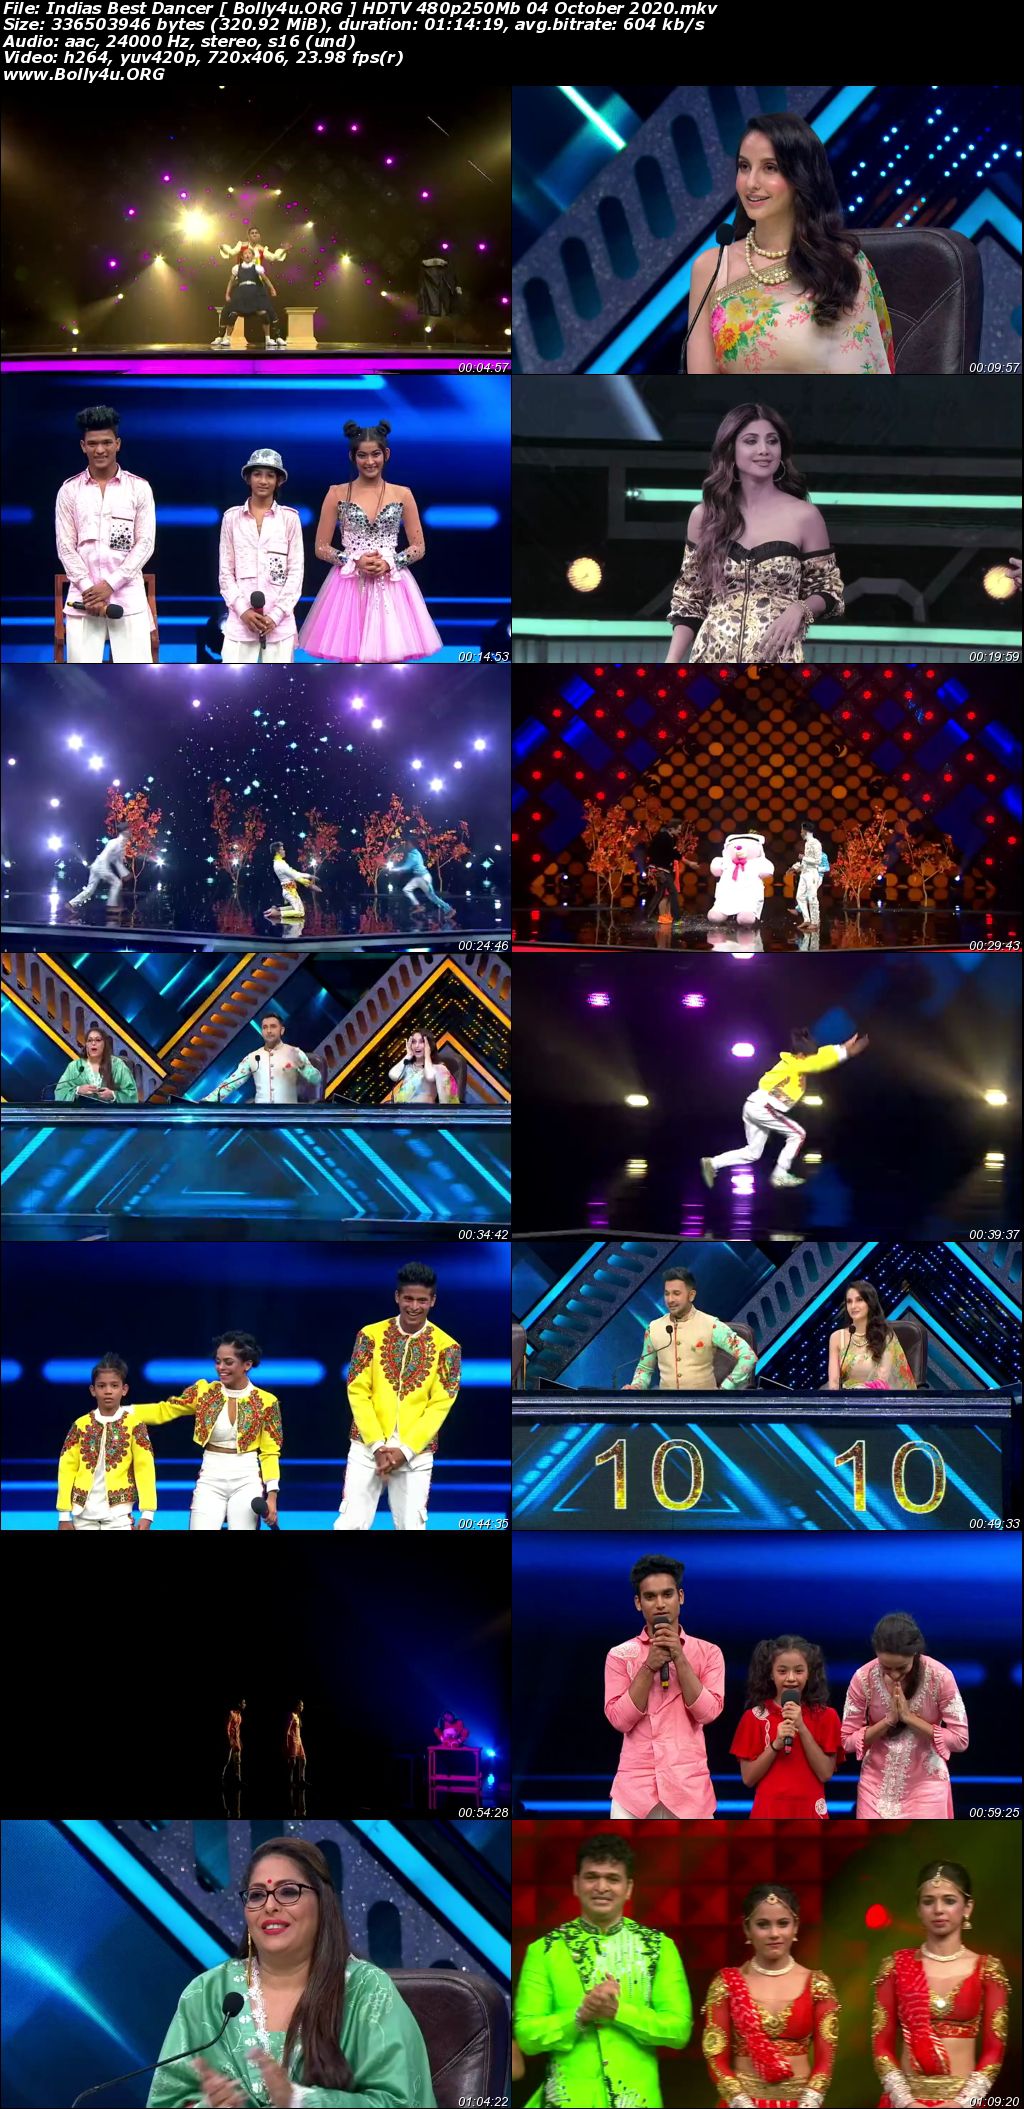 Indias Best Dancer HDTV 480p 250Mb 04 October 2020 Download